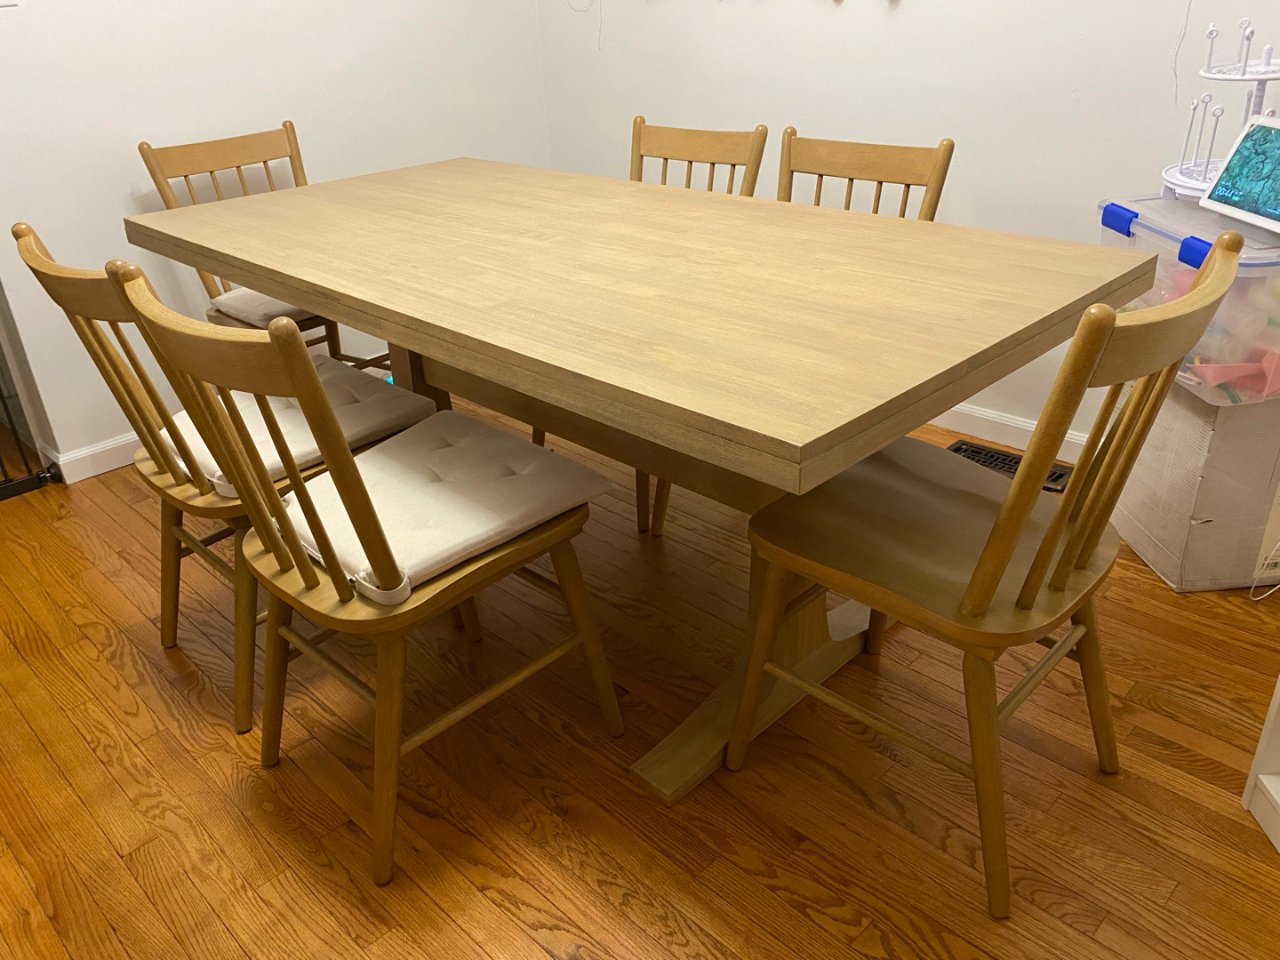 Threshold橡胶木餐椅,Magnolia橡胶木餐桌